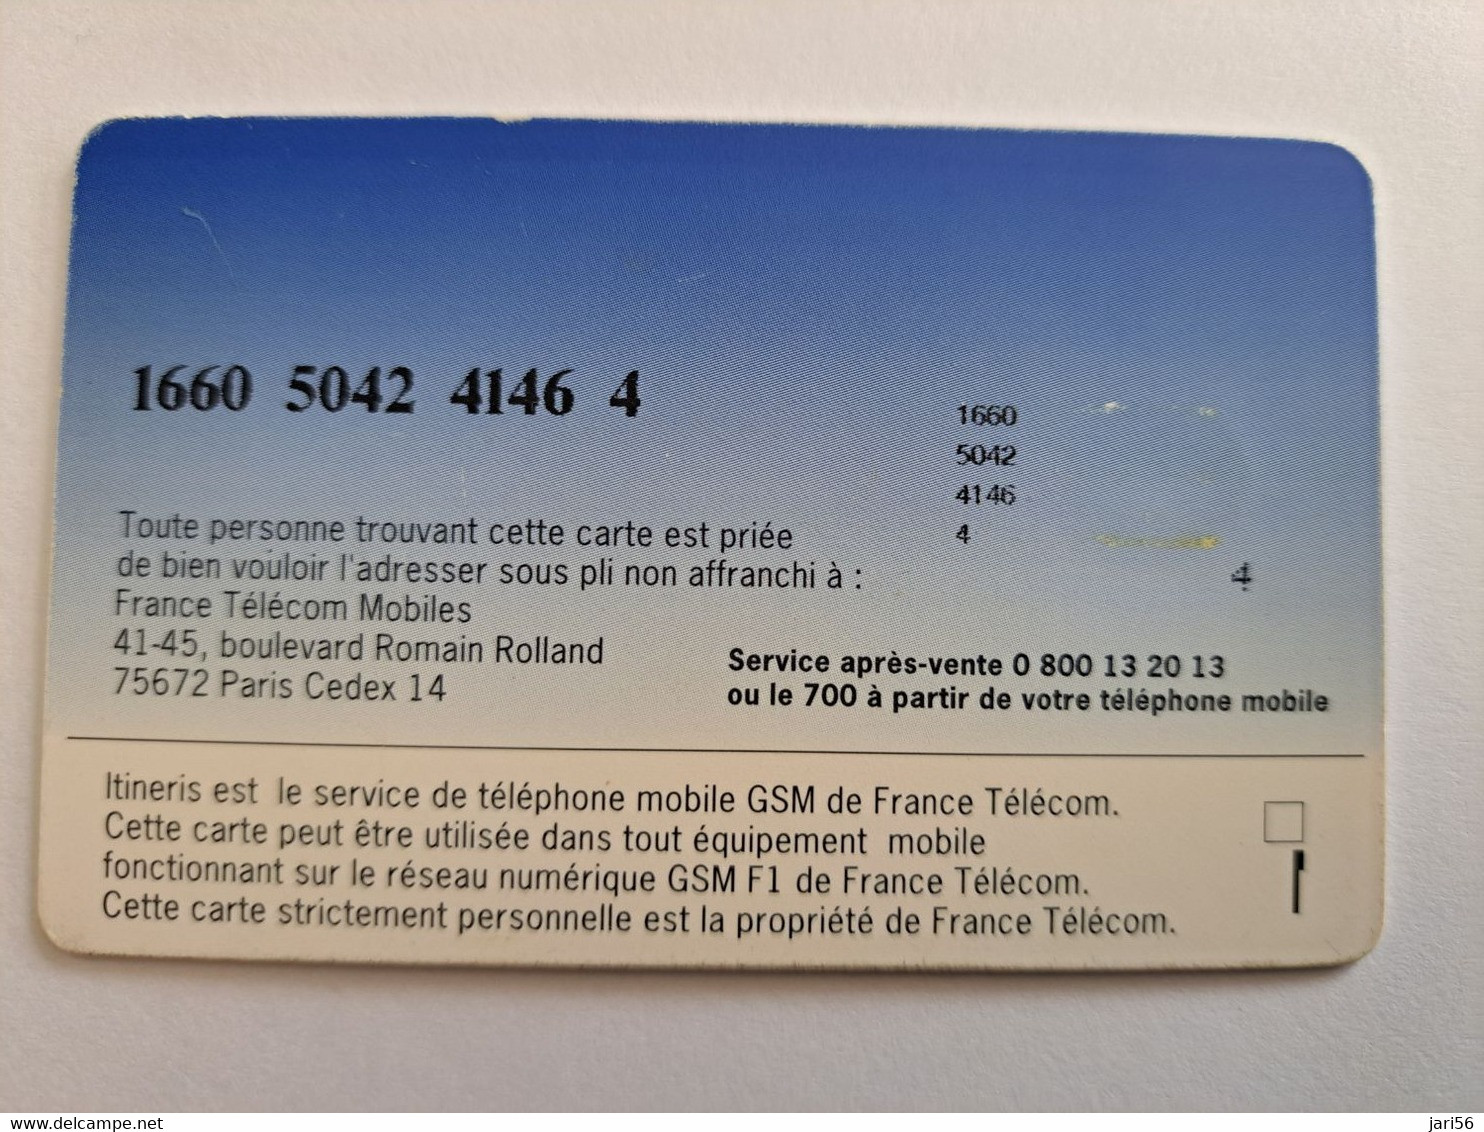 FRANCE/FRANKRIJK   SIM  GSM CARD / ITENERIS  MOBILE   WITH CHIP     ** 10487 ** - Mobicartes (GSM/SIM)